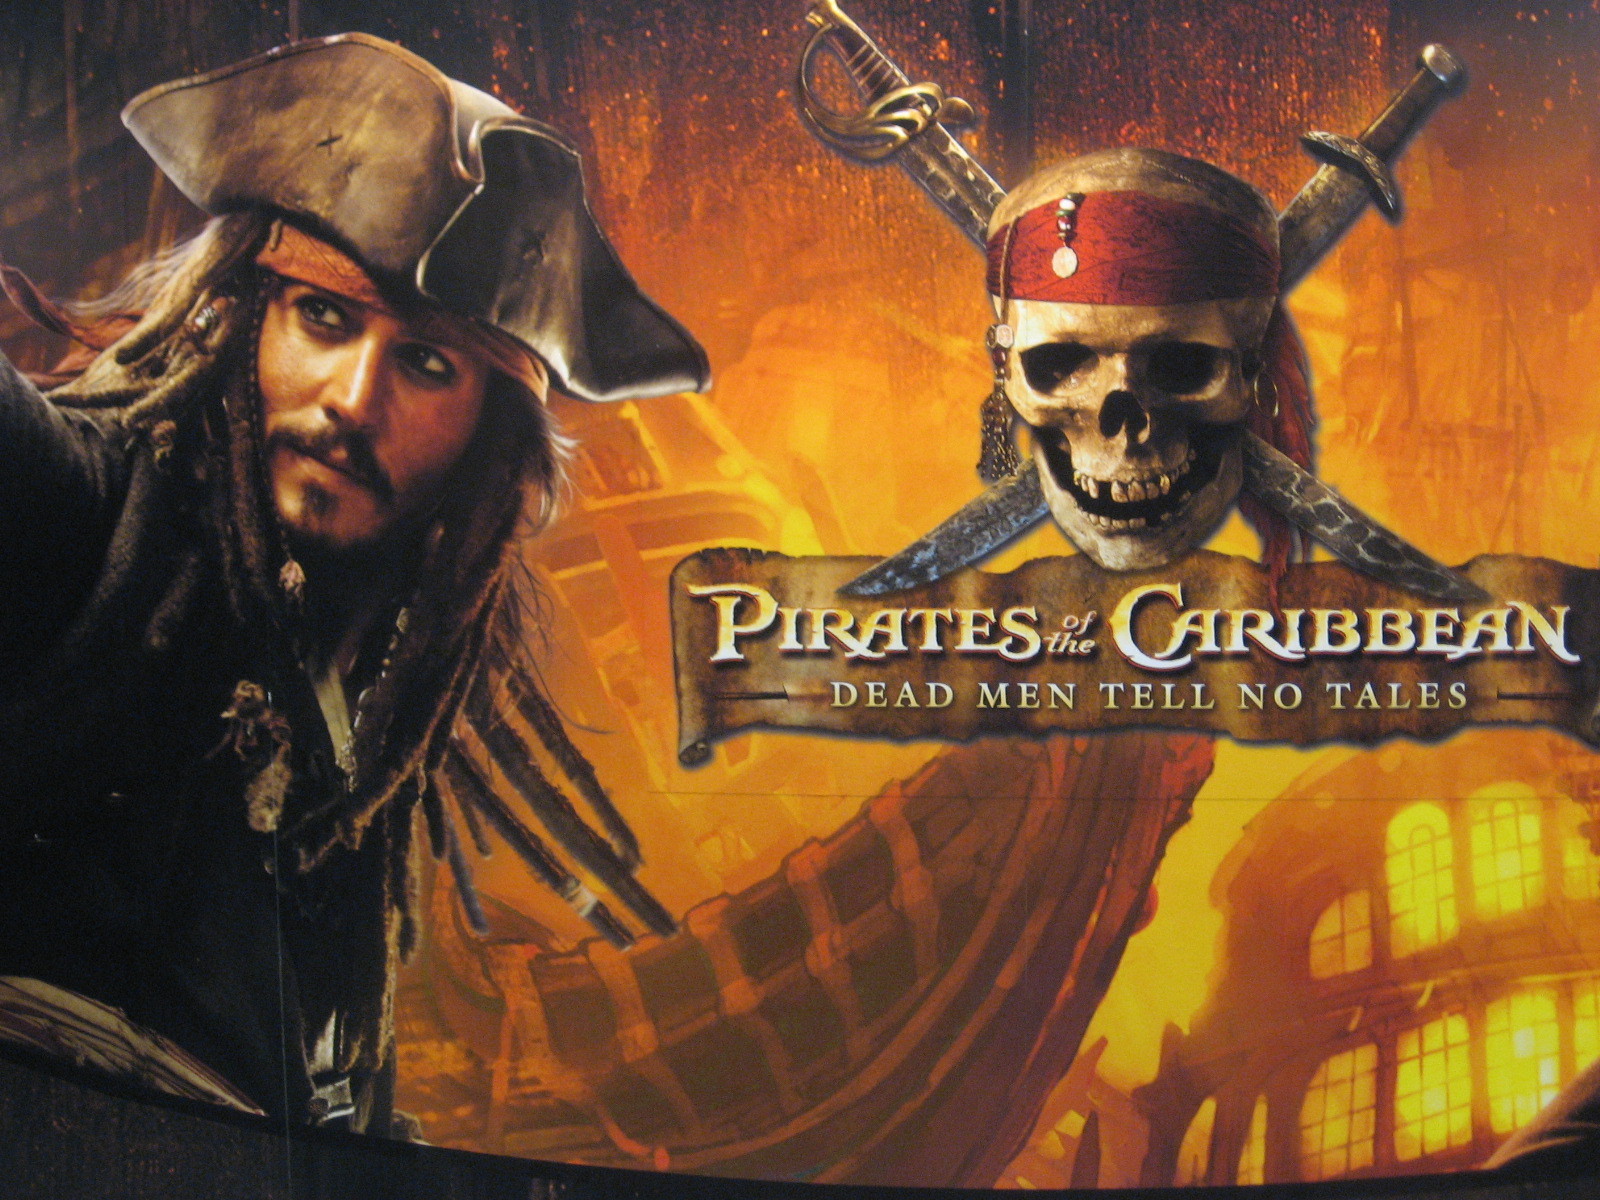 https://images2.fanpop.com/image/photos/10500000/Dead-Men-Tell-No-Tales-pirates-of-the-caribbean-10520316-1600-1200.jpg